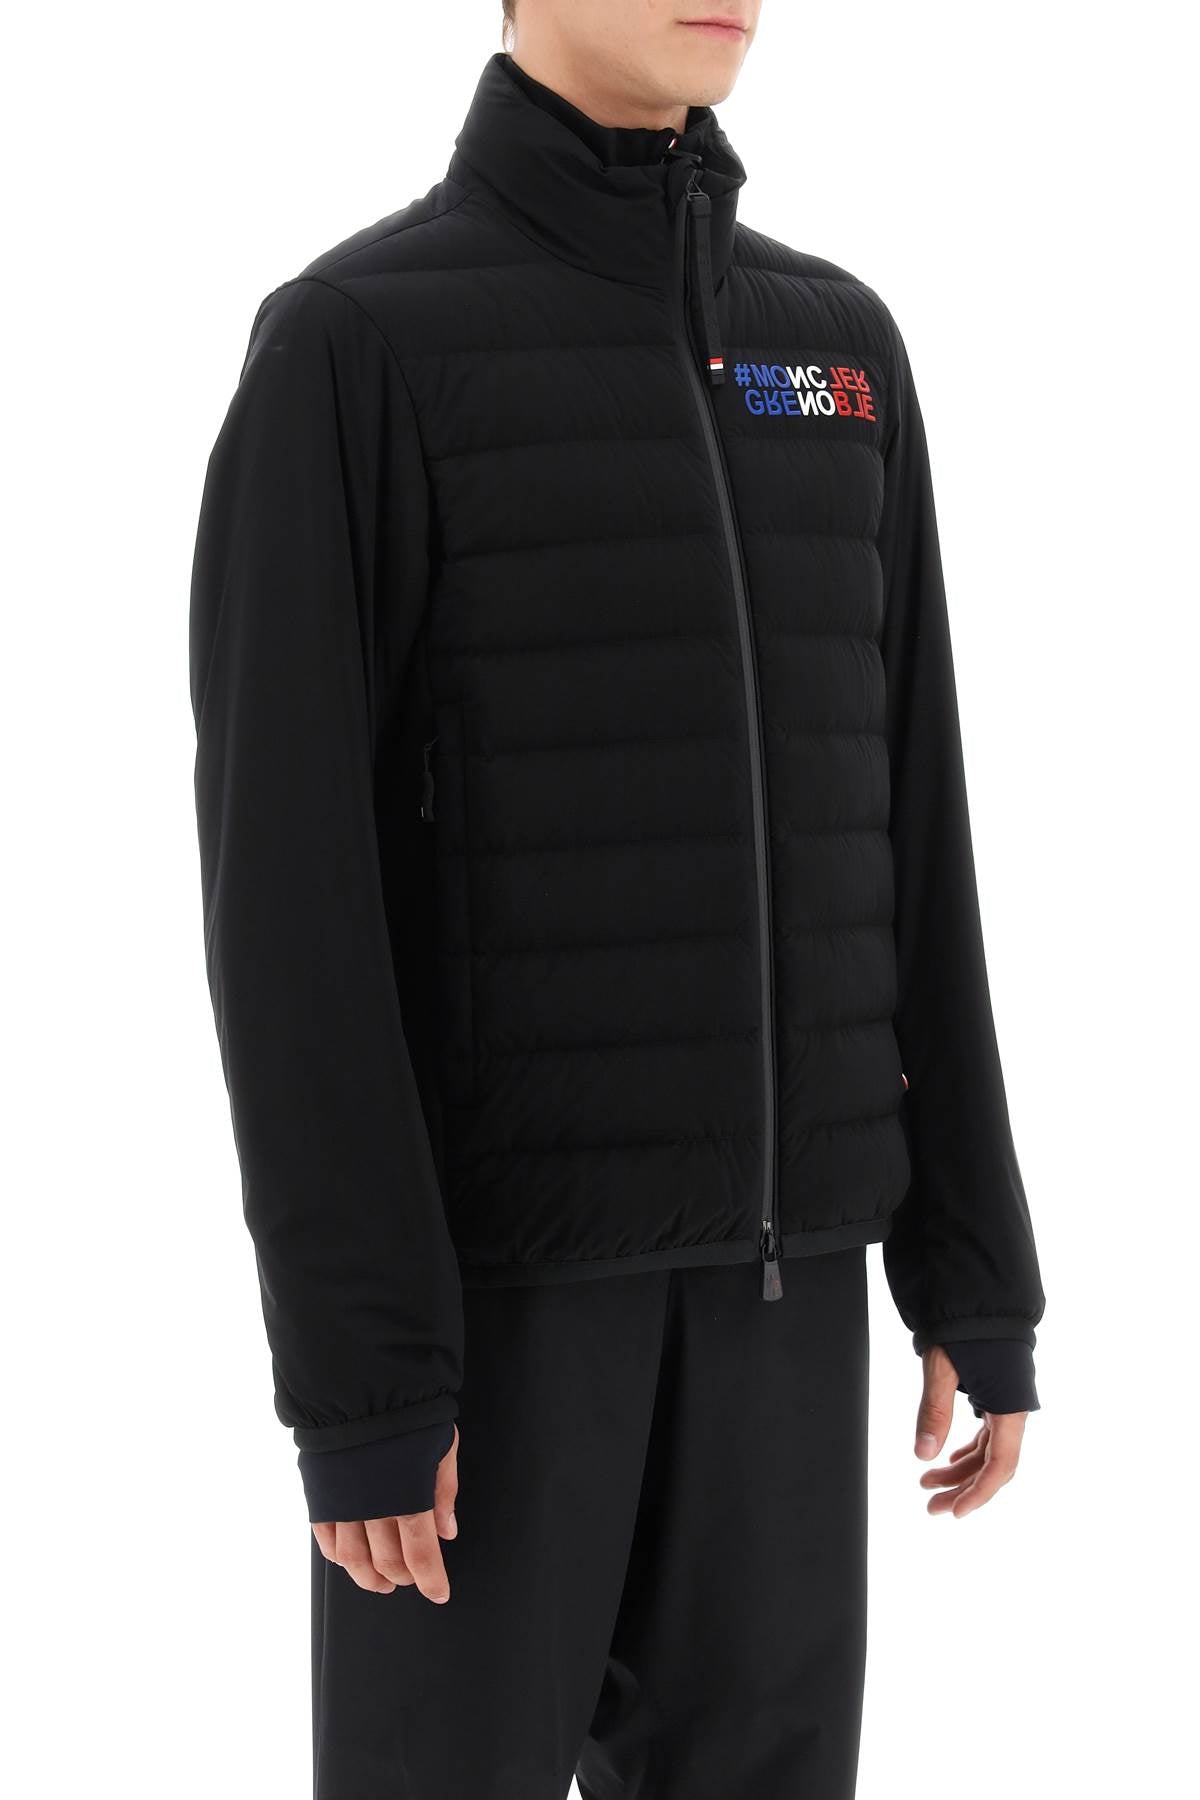 Moncler Grenoble crepol lightweight jacket 1A0003453513999